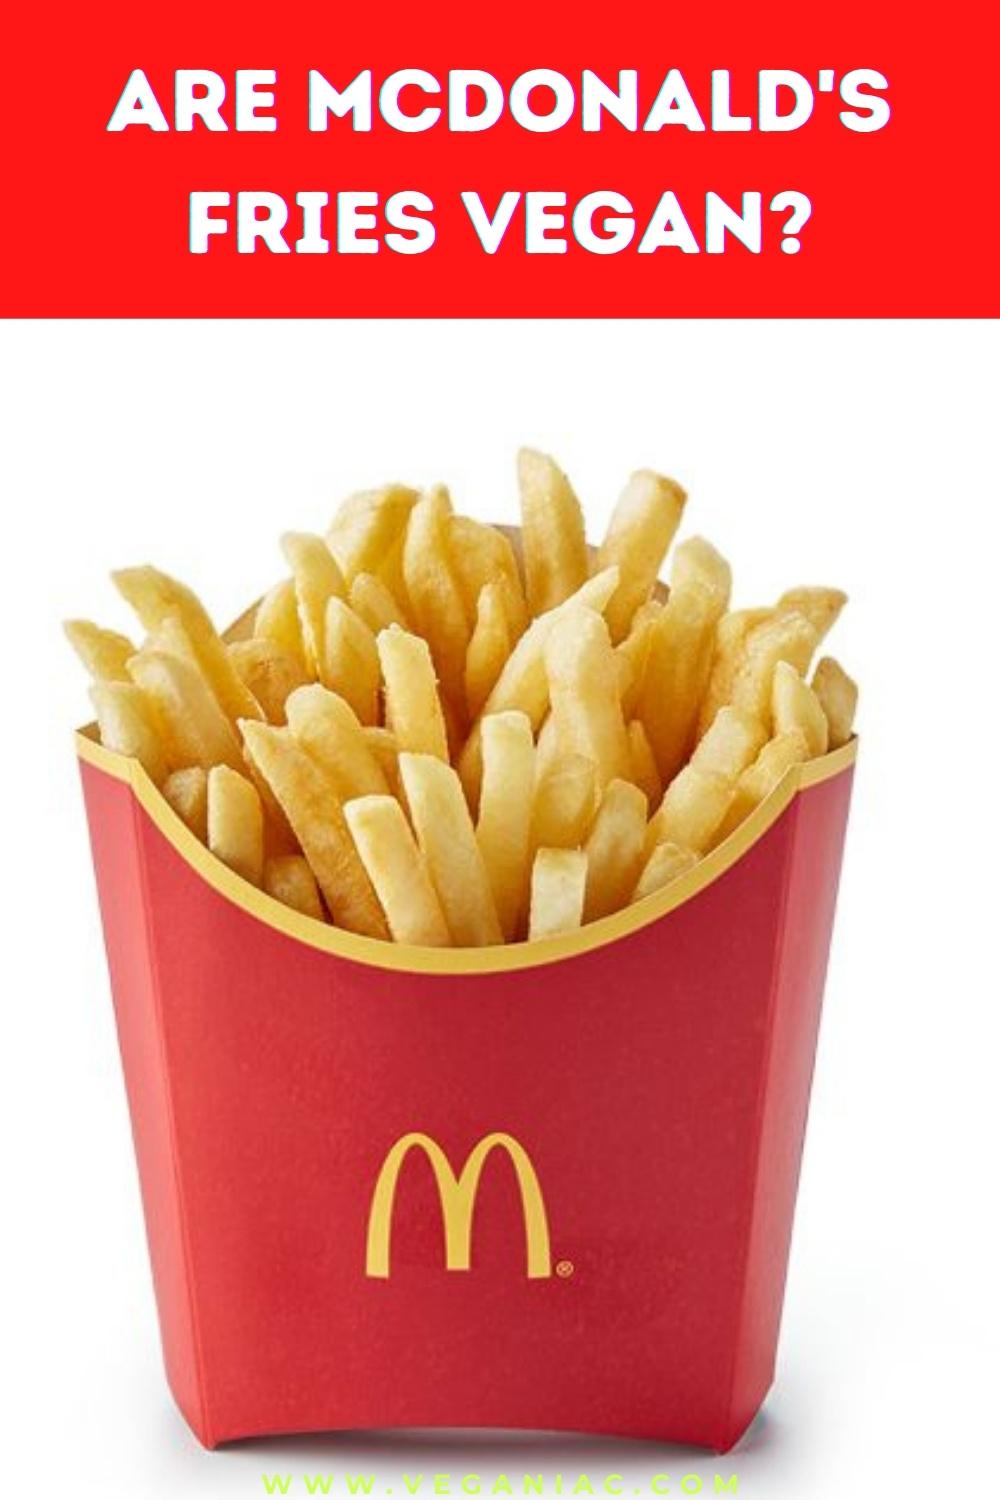 Are McDonald's Fries Vegan?